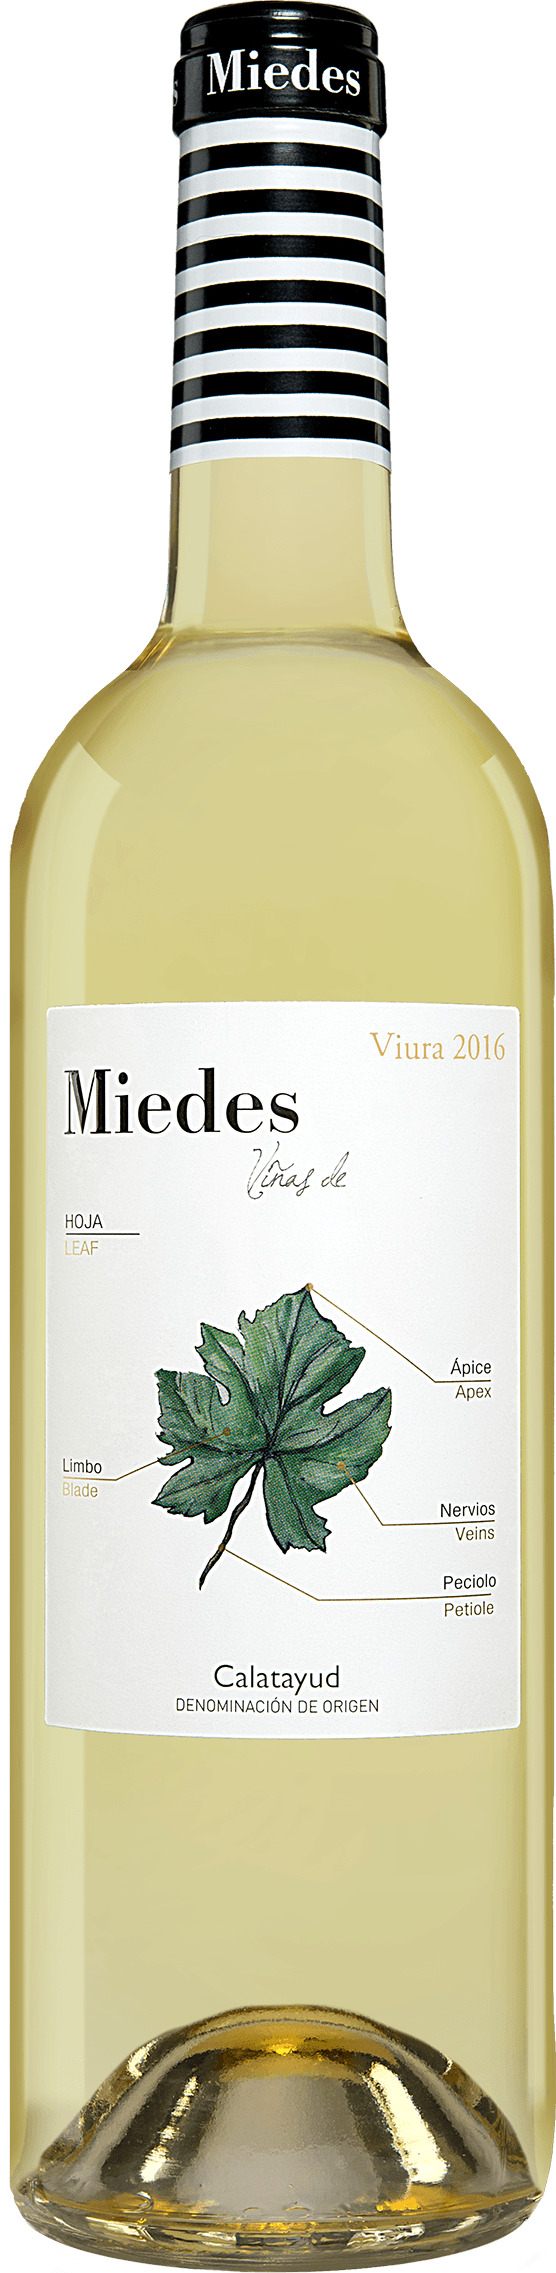 San Alejandro, Vinas De Miedes Viura, 2015